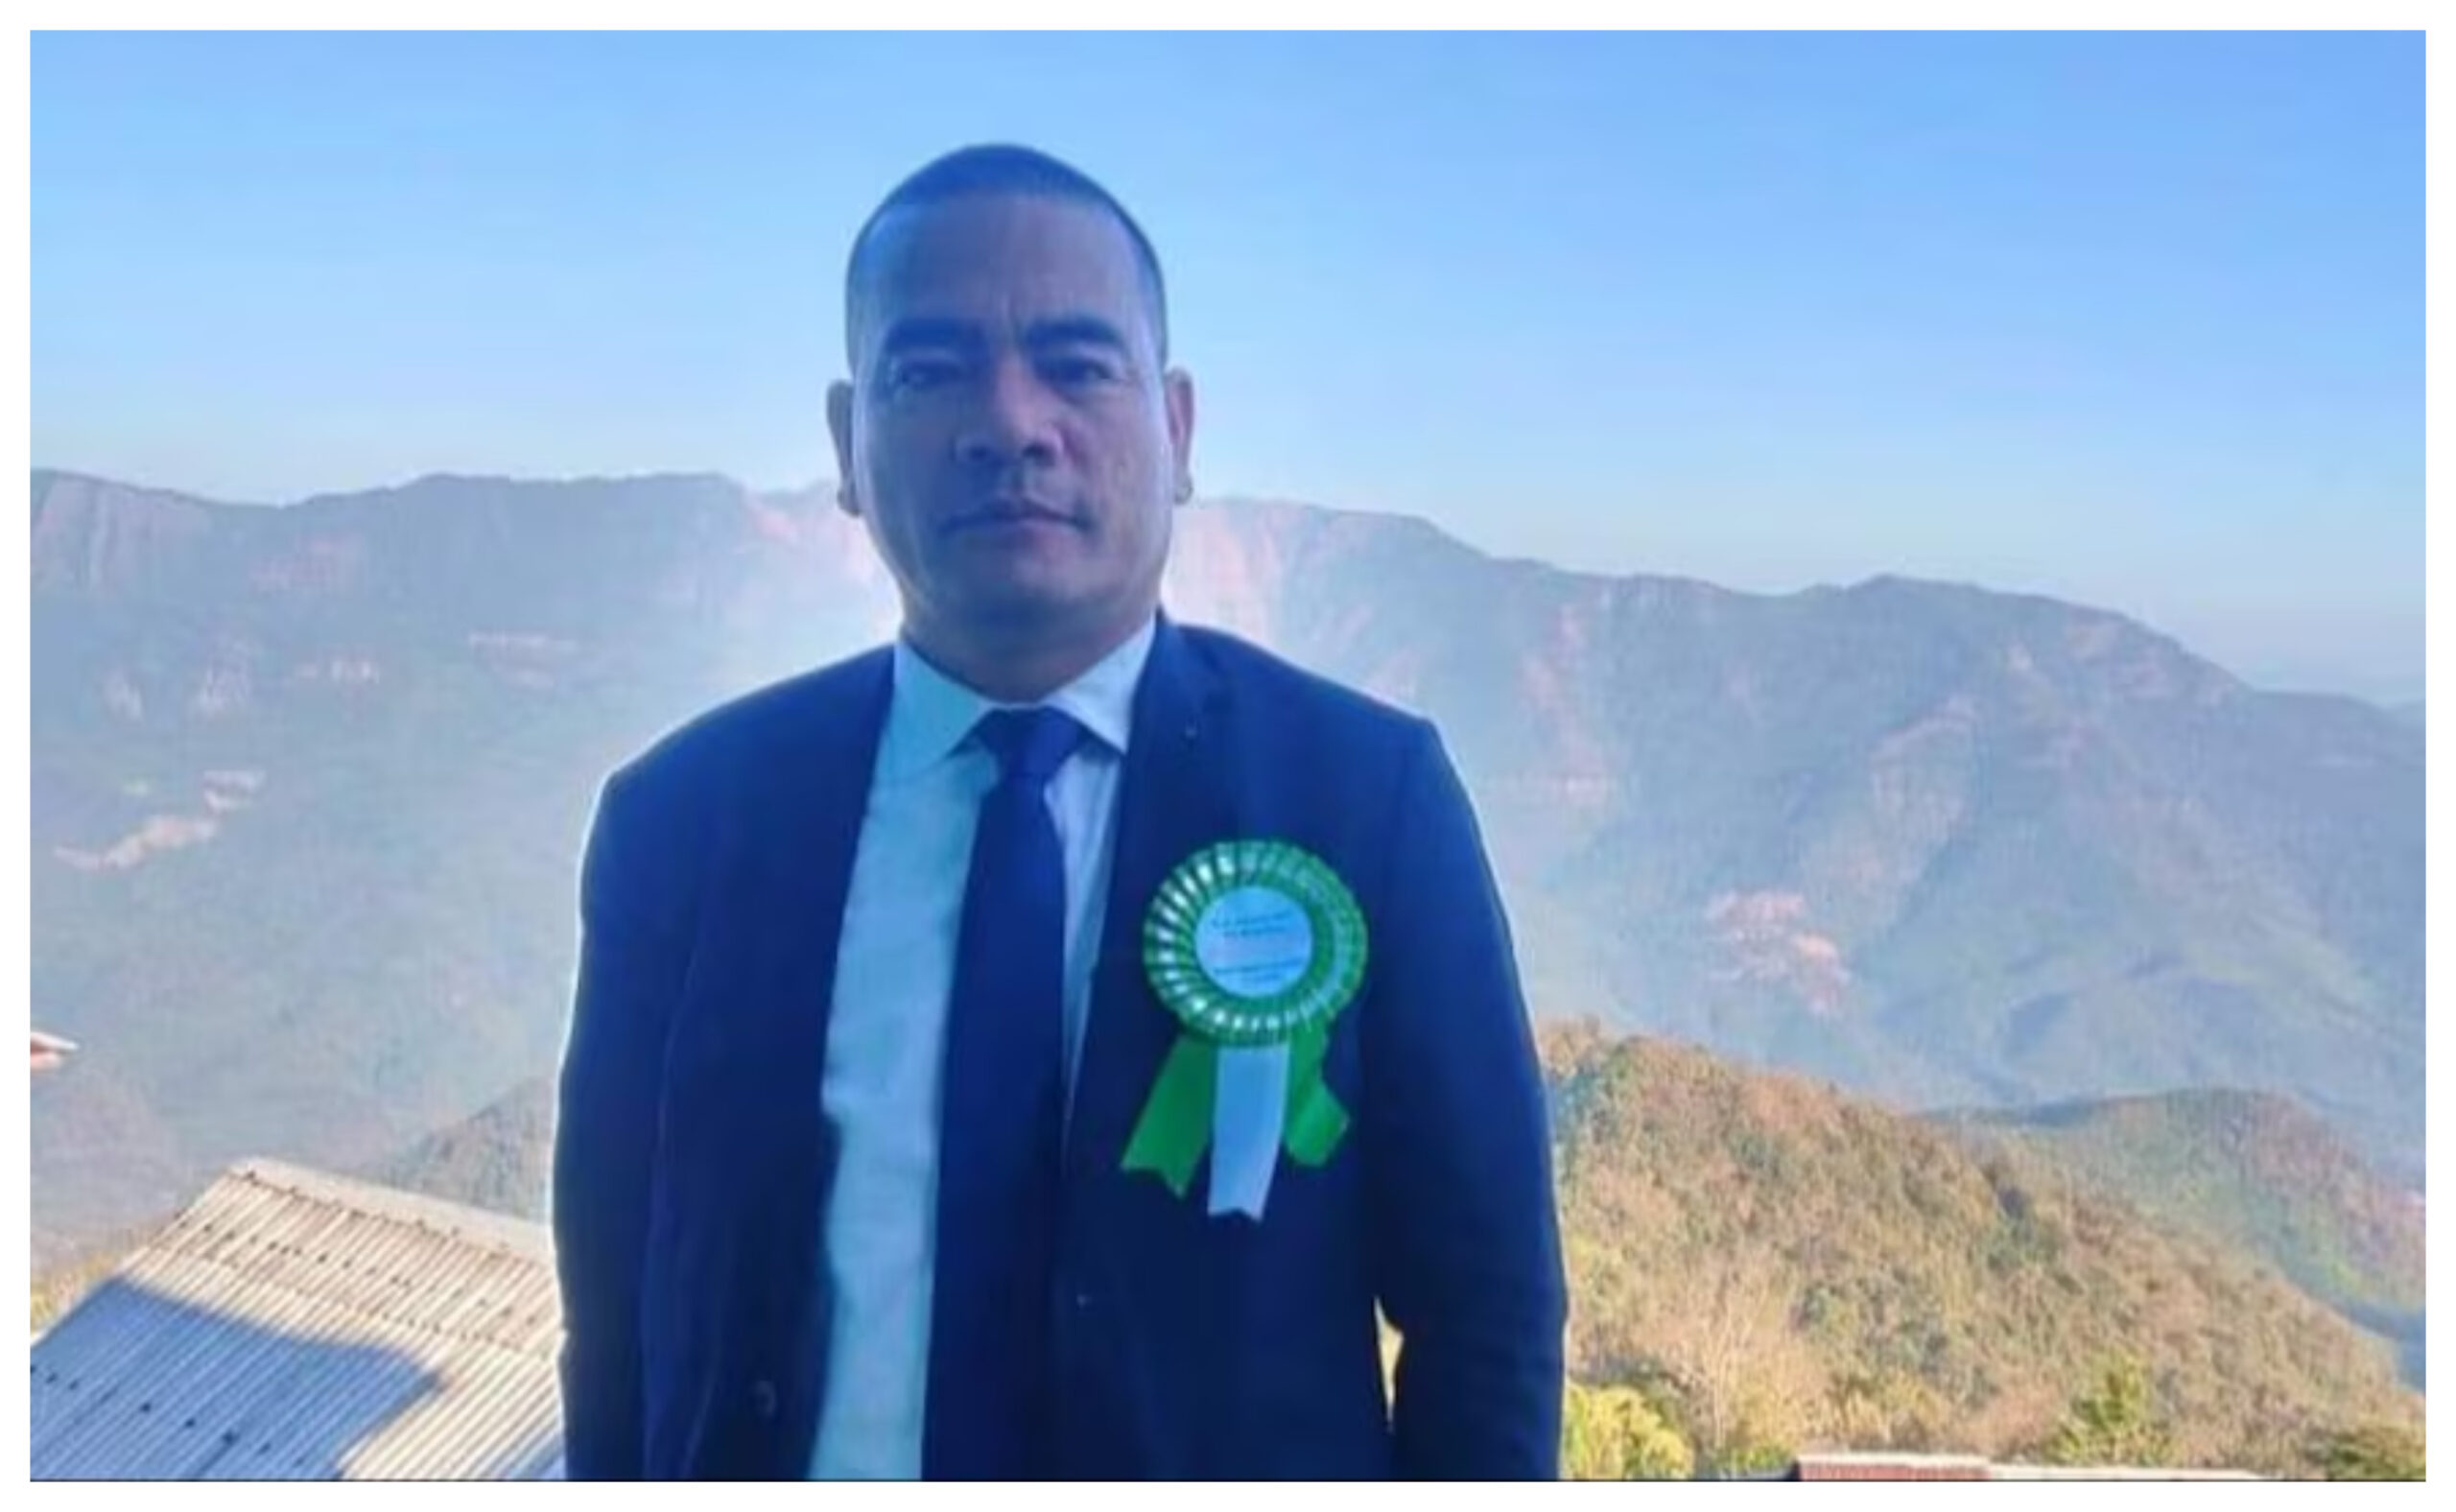 Mizoram: The main reason for low voting in Mizoram is voter apathy - H. Liangella